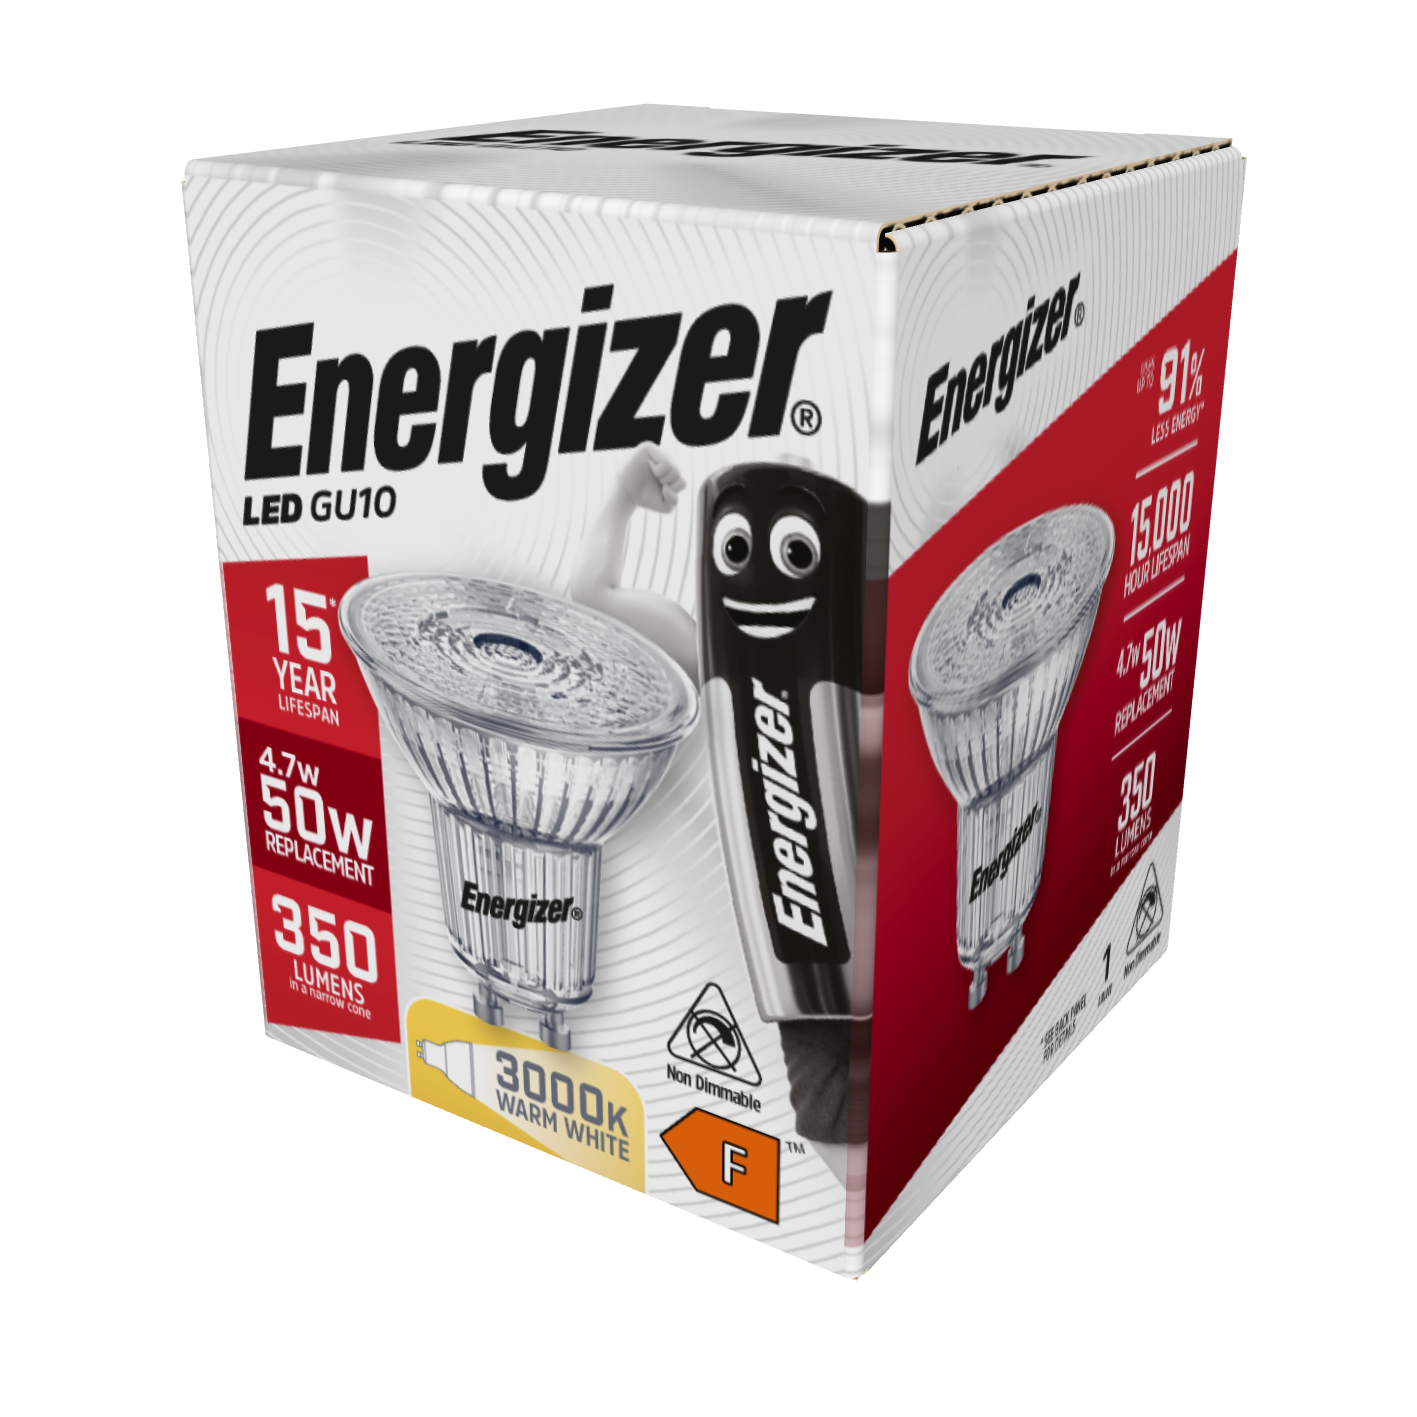 Energizer LED GU10 350 Lumens 4.7W 3,000K (Warm White), Box of 1